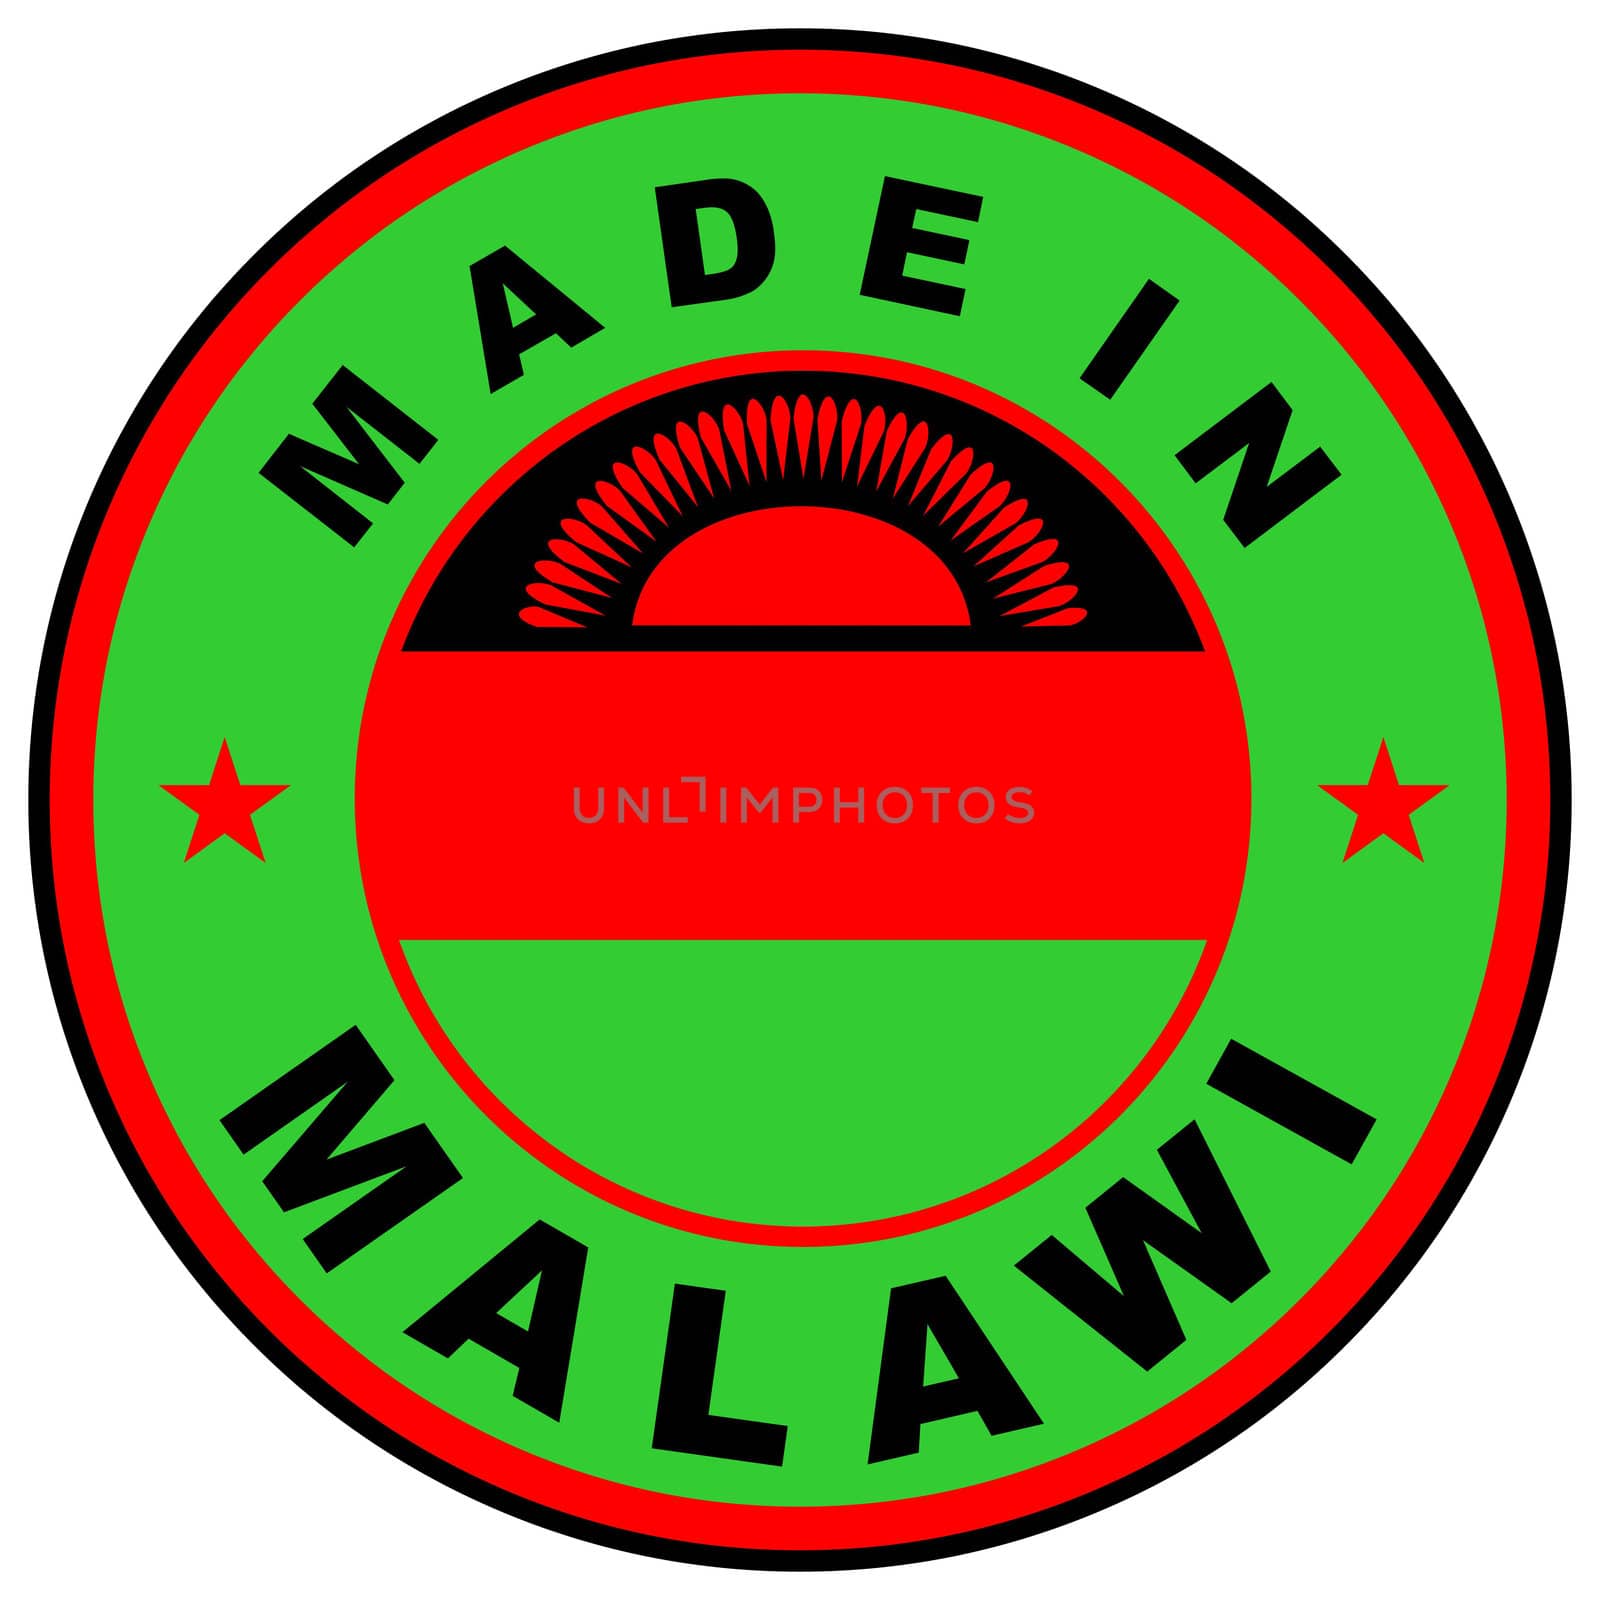 made in malawi by tony4urban